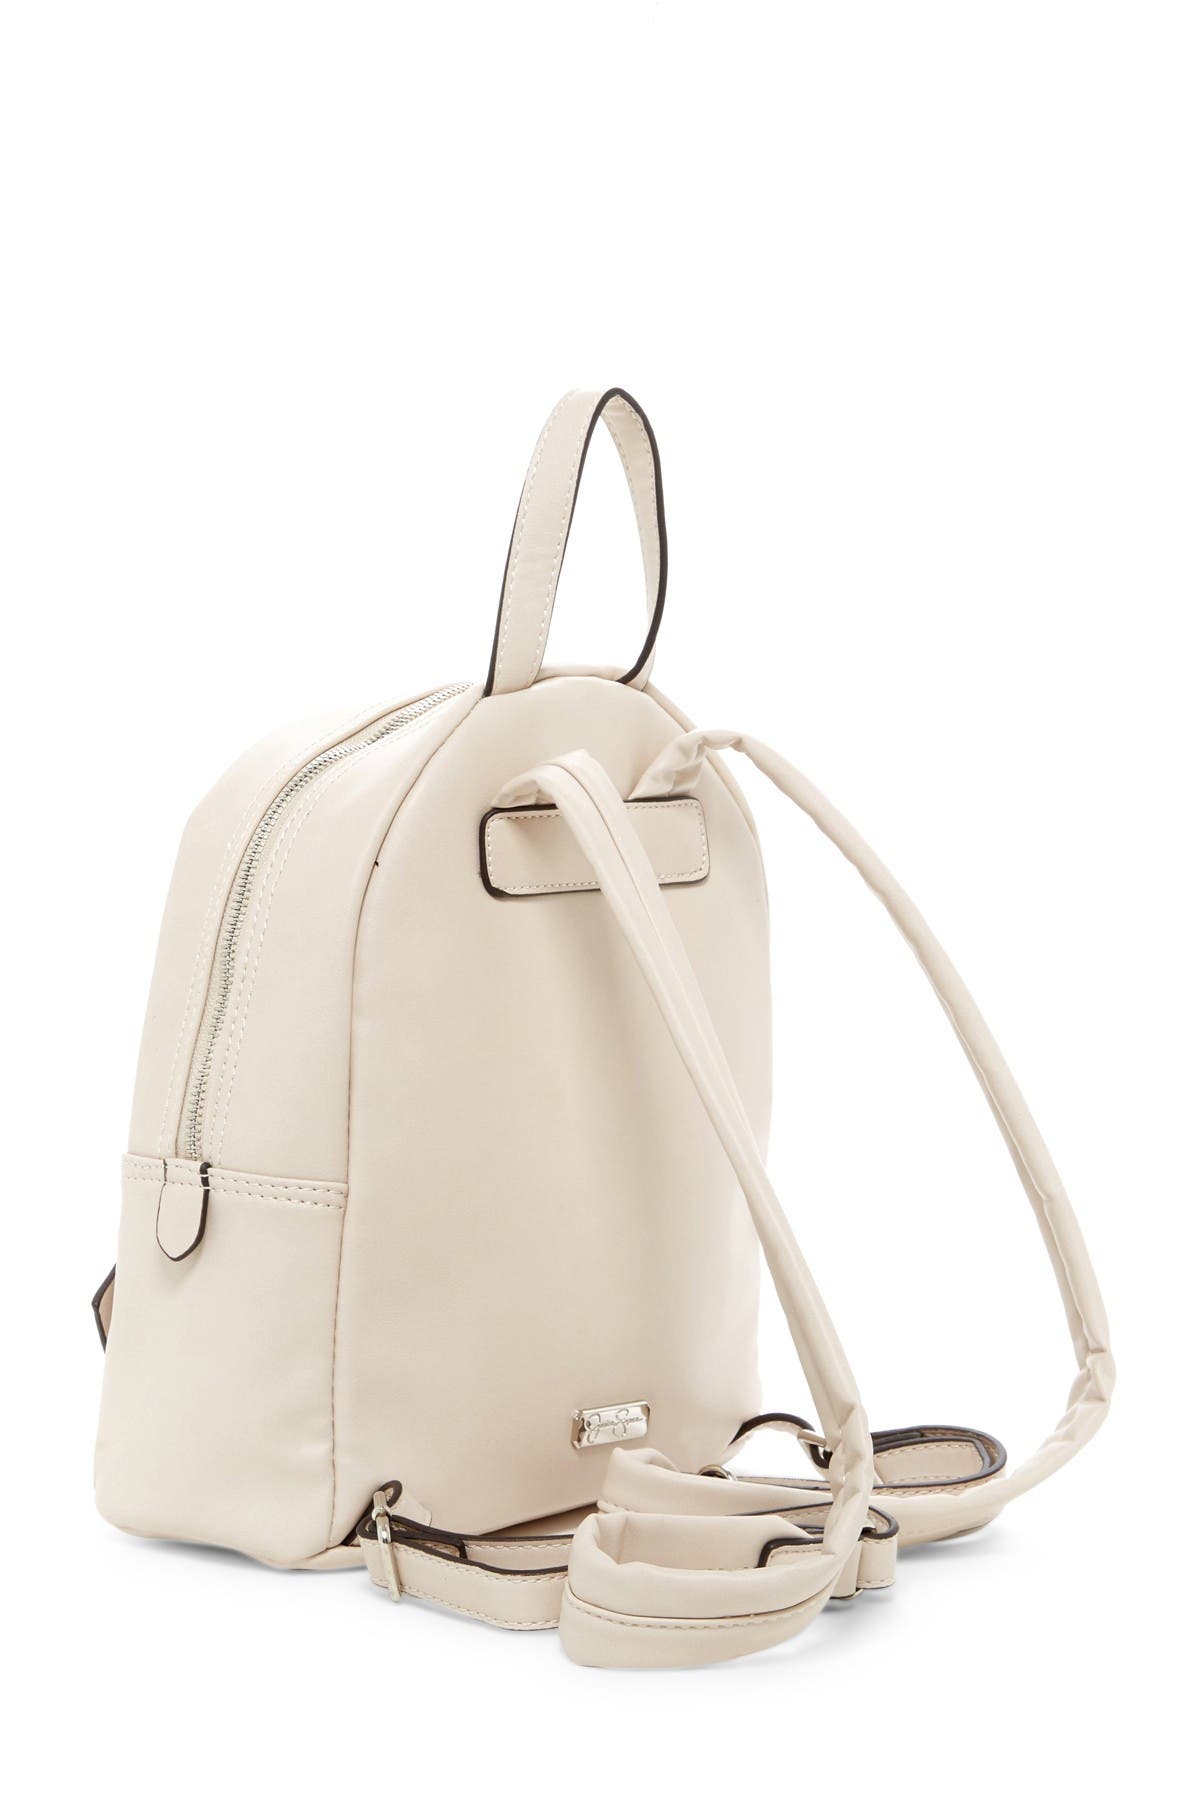 Jessica Simpson | Kandiss Studded Bow Mini Backpack | Nordstrom Rack